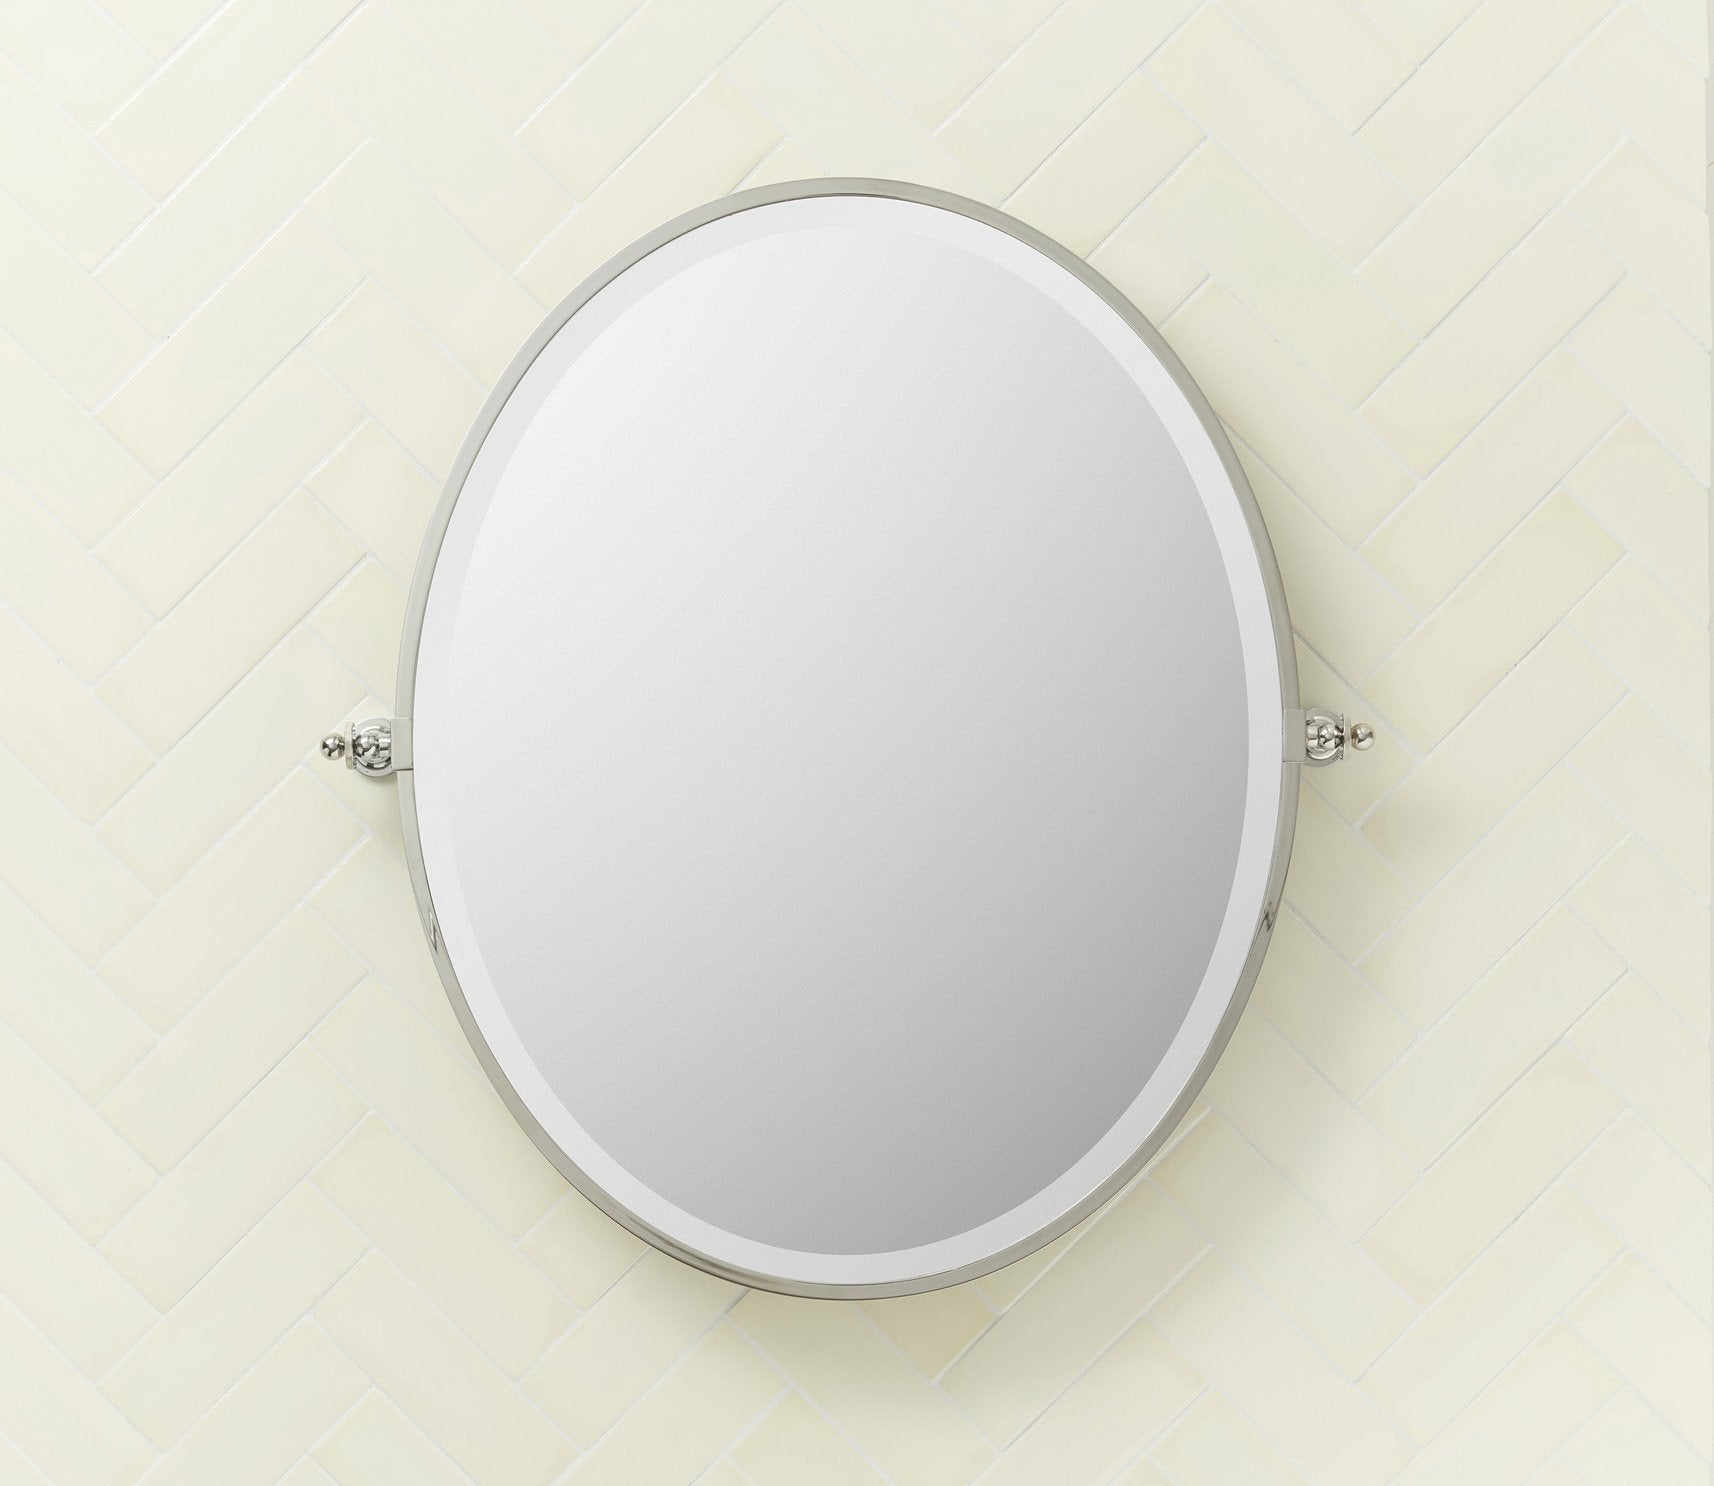 Hanbury Oval Tilting Mirror Product Image 2